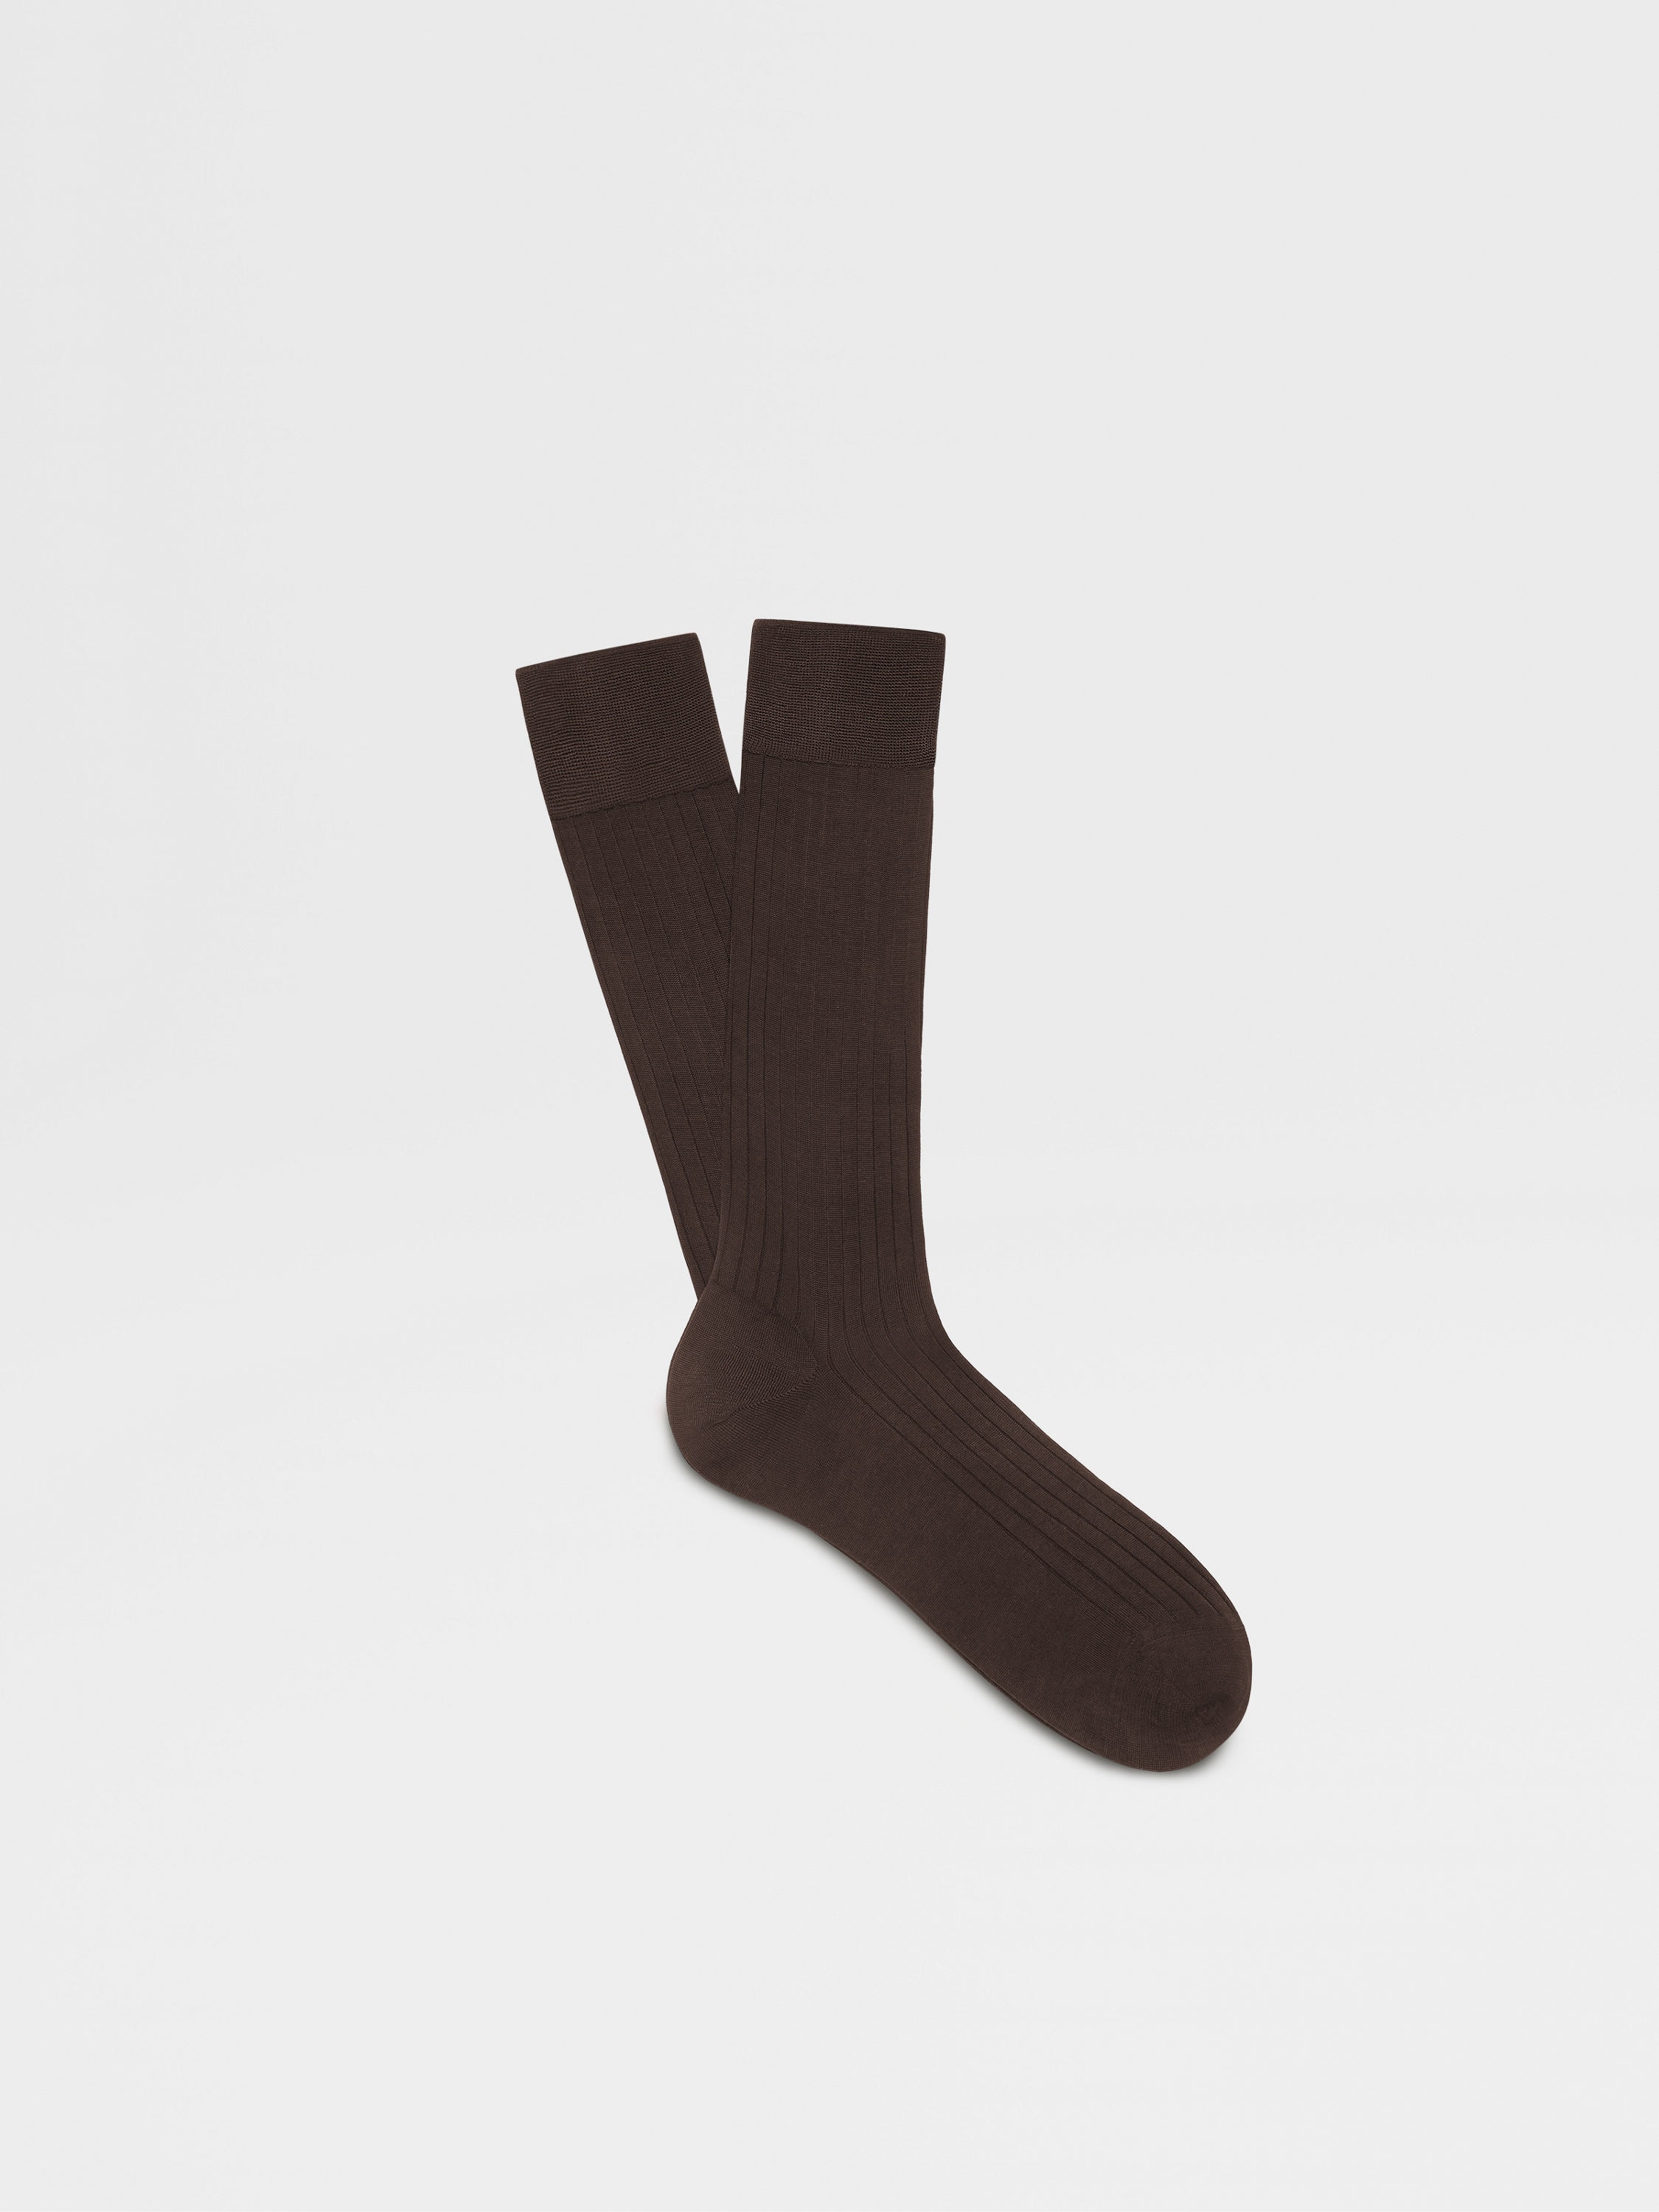 Brown Cotton Socks